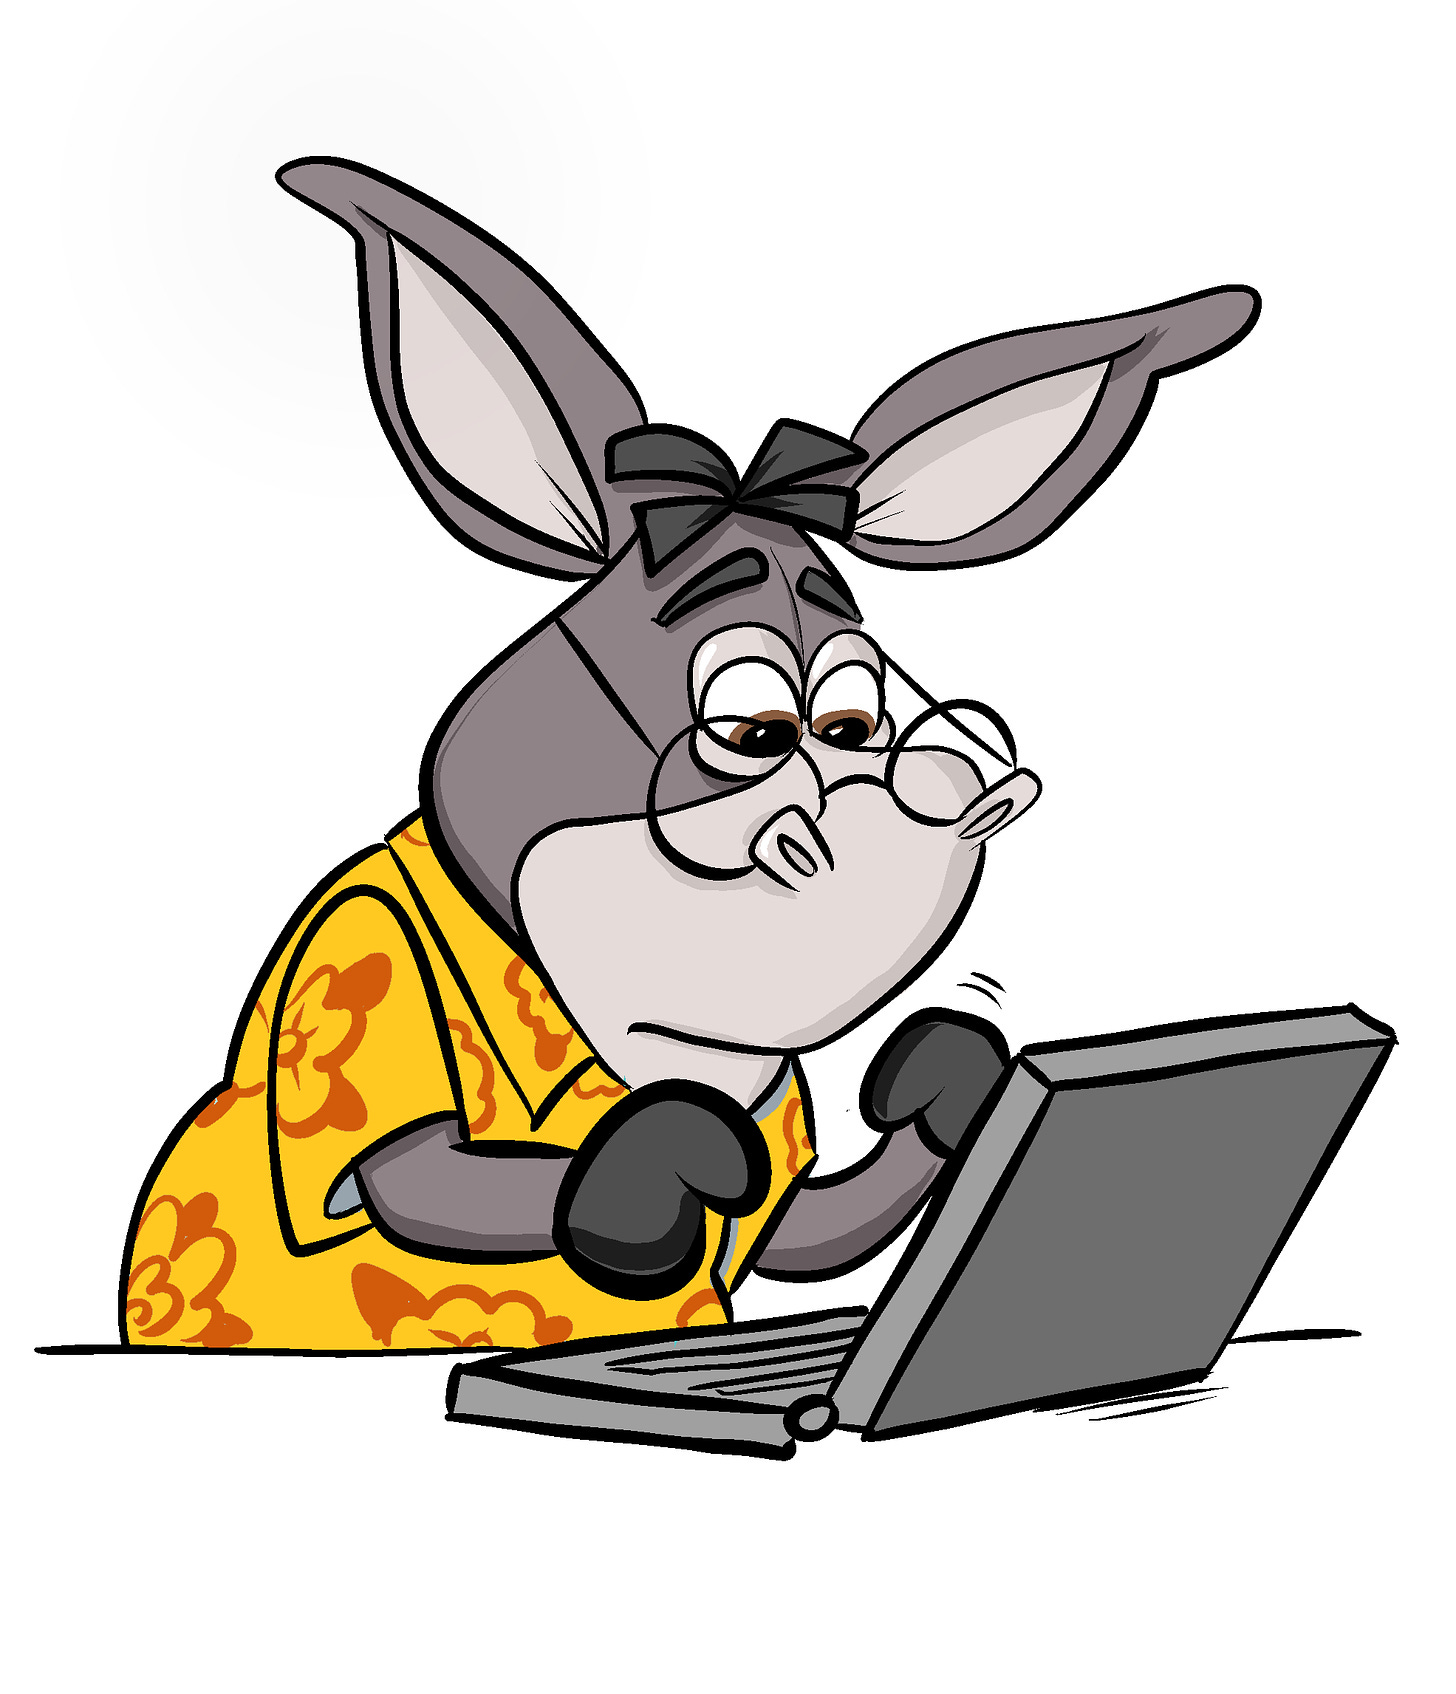 Hoté typing away on a laptop. He's a donkey.